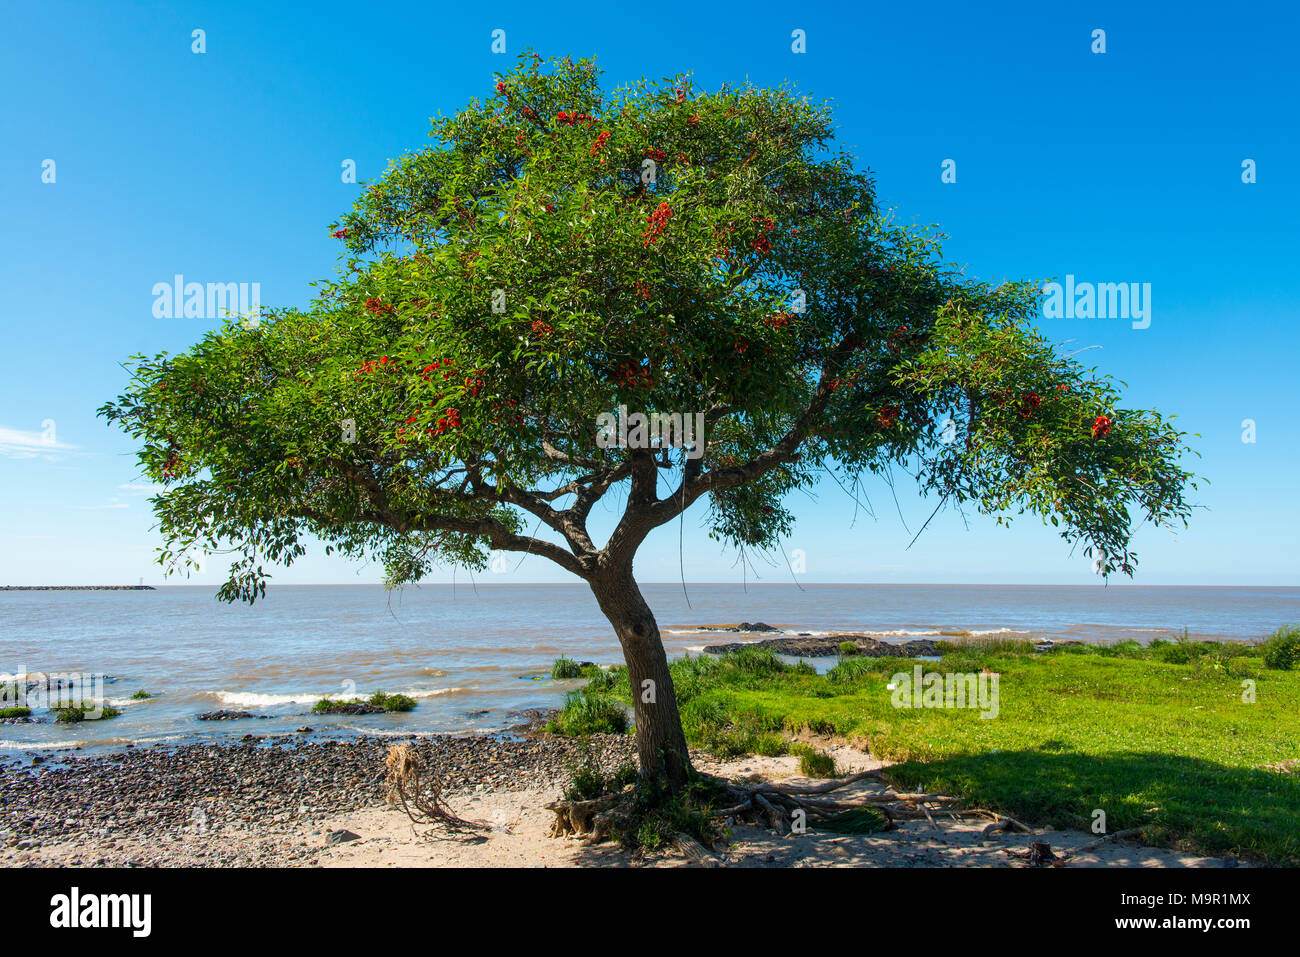 Coral tree (Erythrina), Uruguayan national tree, on the banks of the Rio de la Plata, Colonia del Sacramento, Uruguay Stock Photo